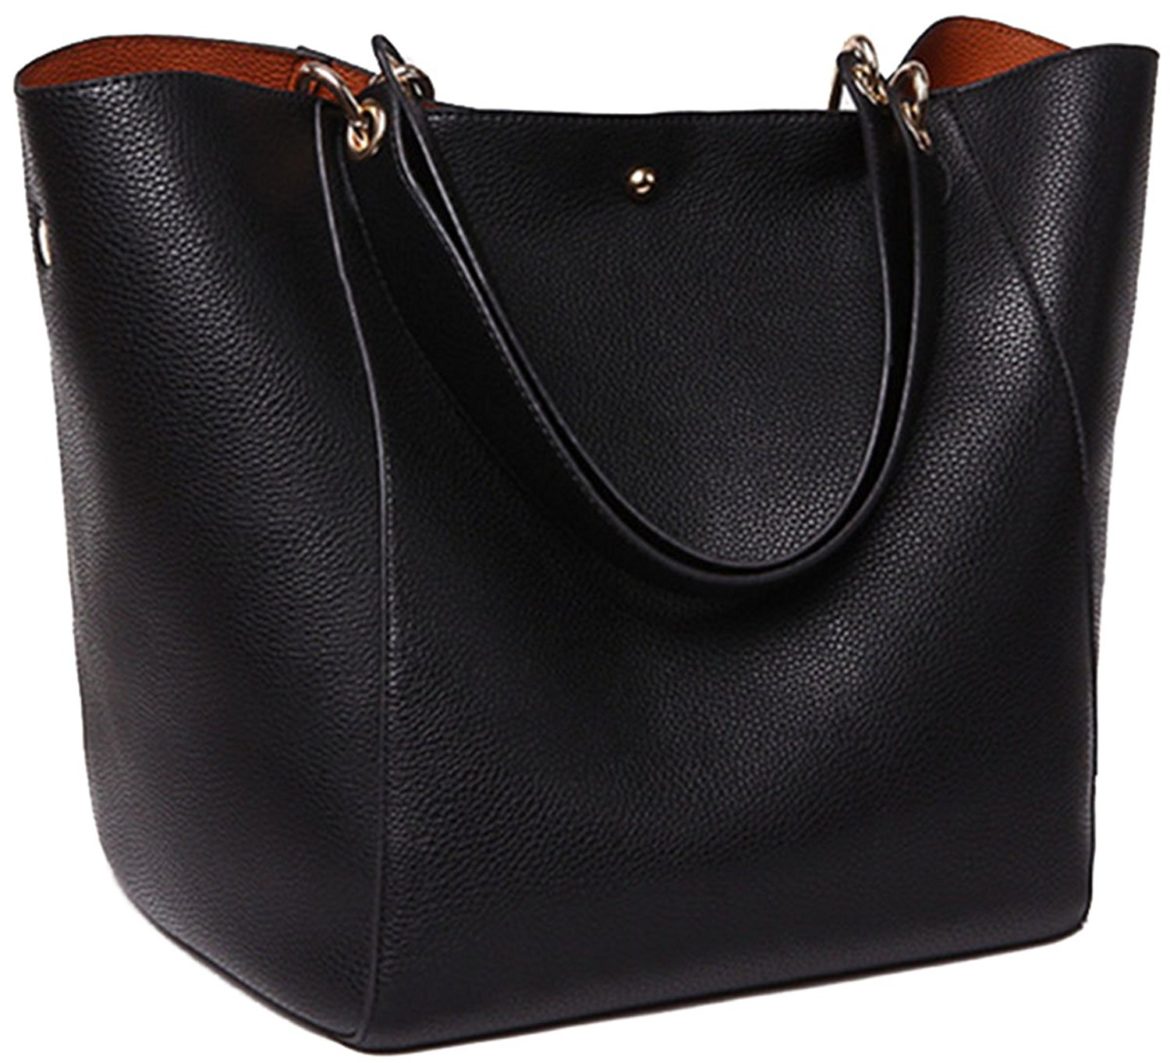 SQLP Fashion Women’s Leather Handbags ladies Waterproof Shoulder Bag ...